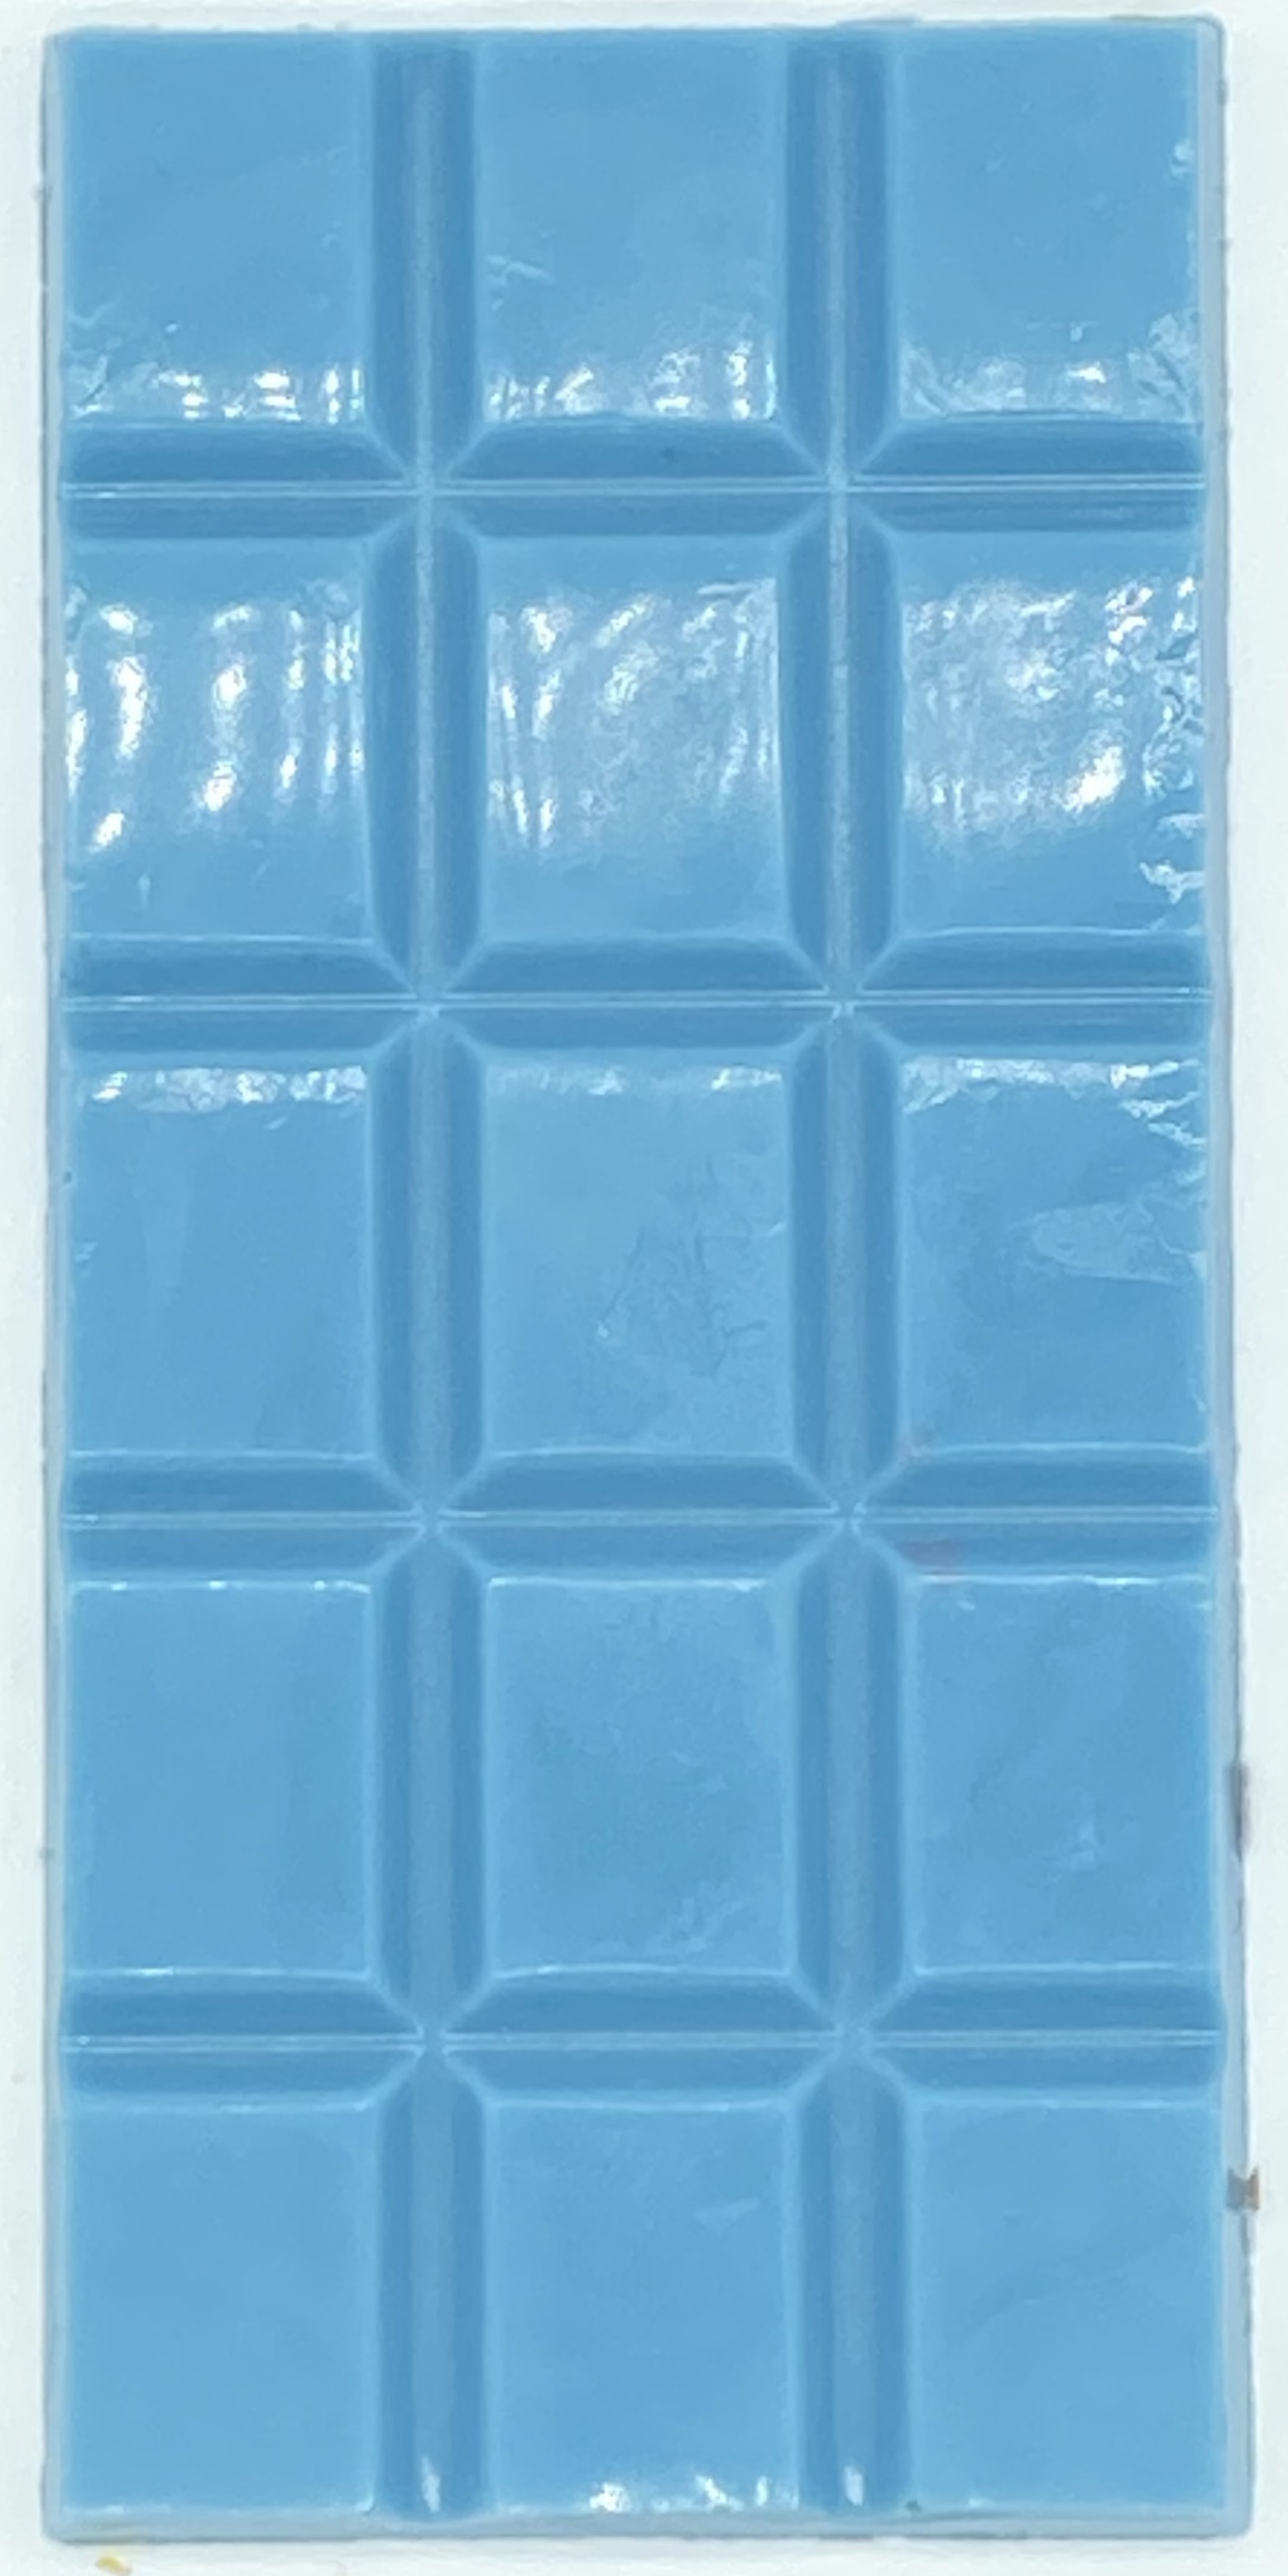 spirulina bright blue chocolate bar